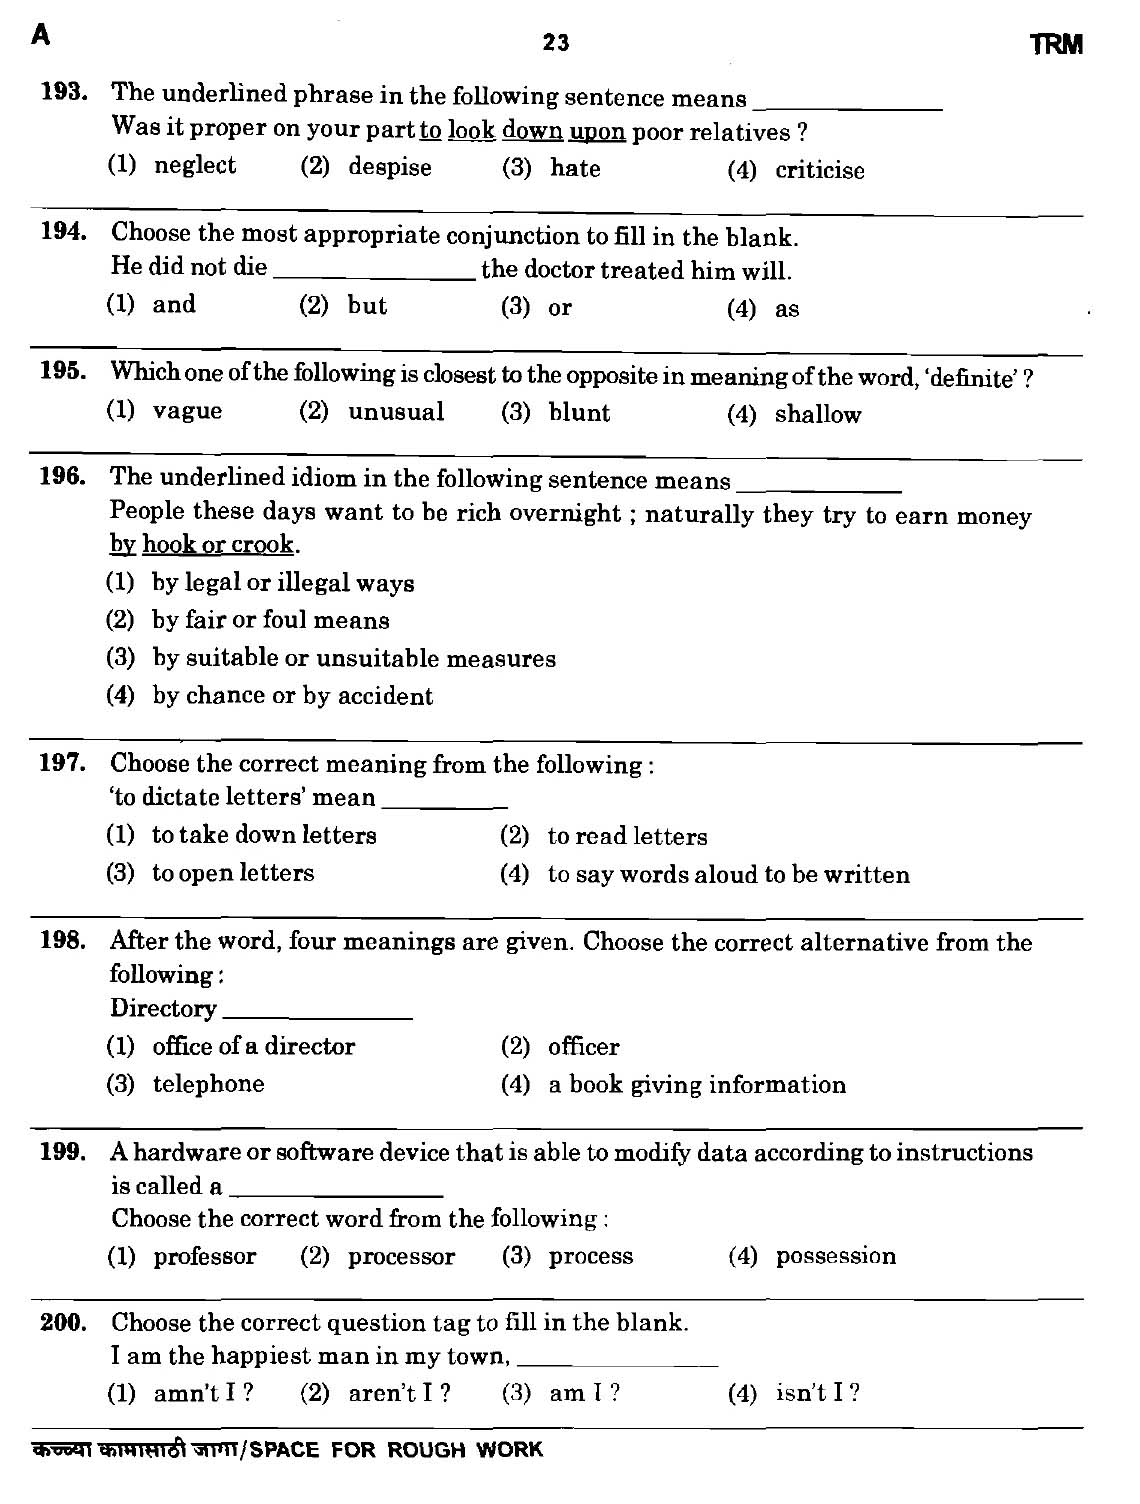 Maharashtra PSC Clerk Typist Exam Question Paper 2011 22